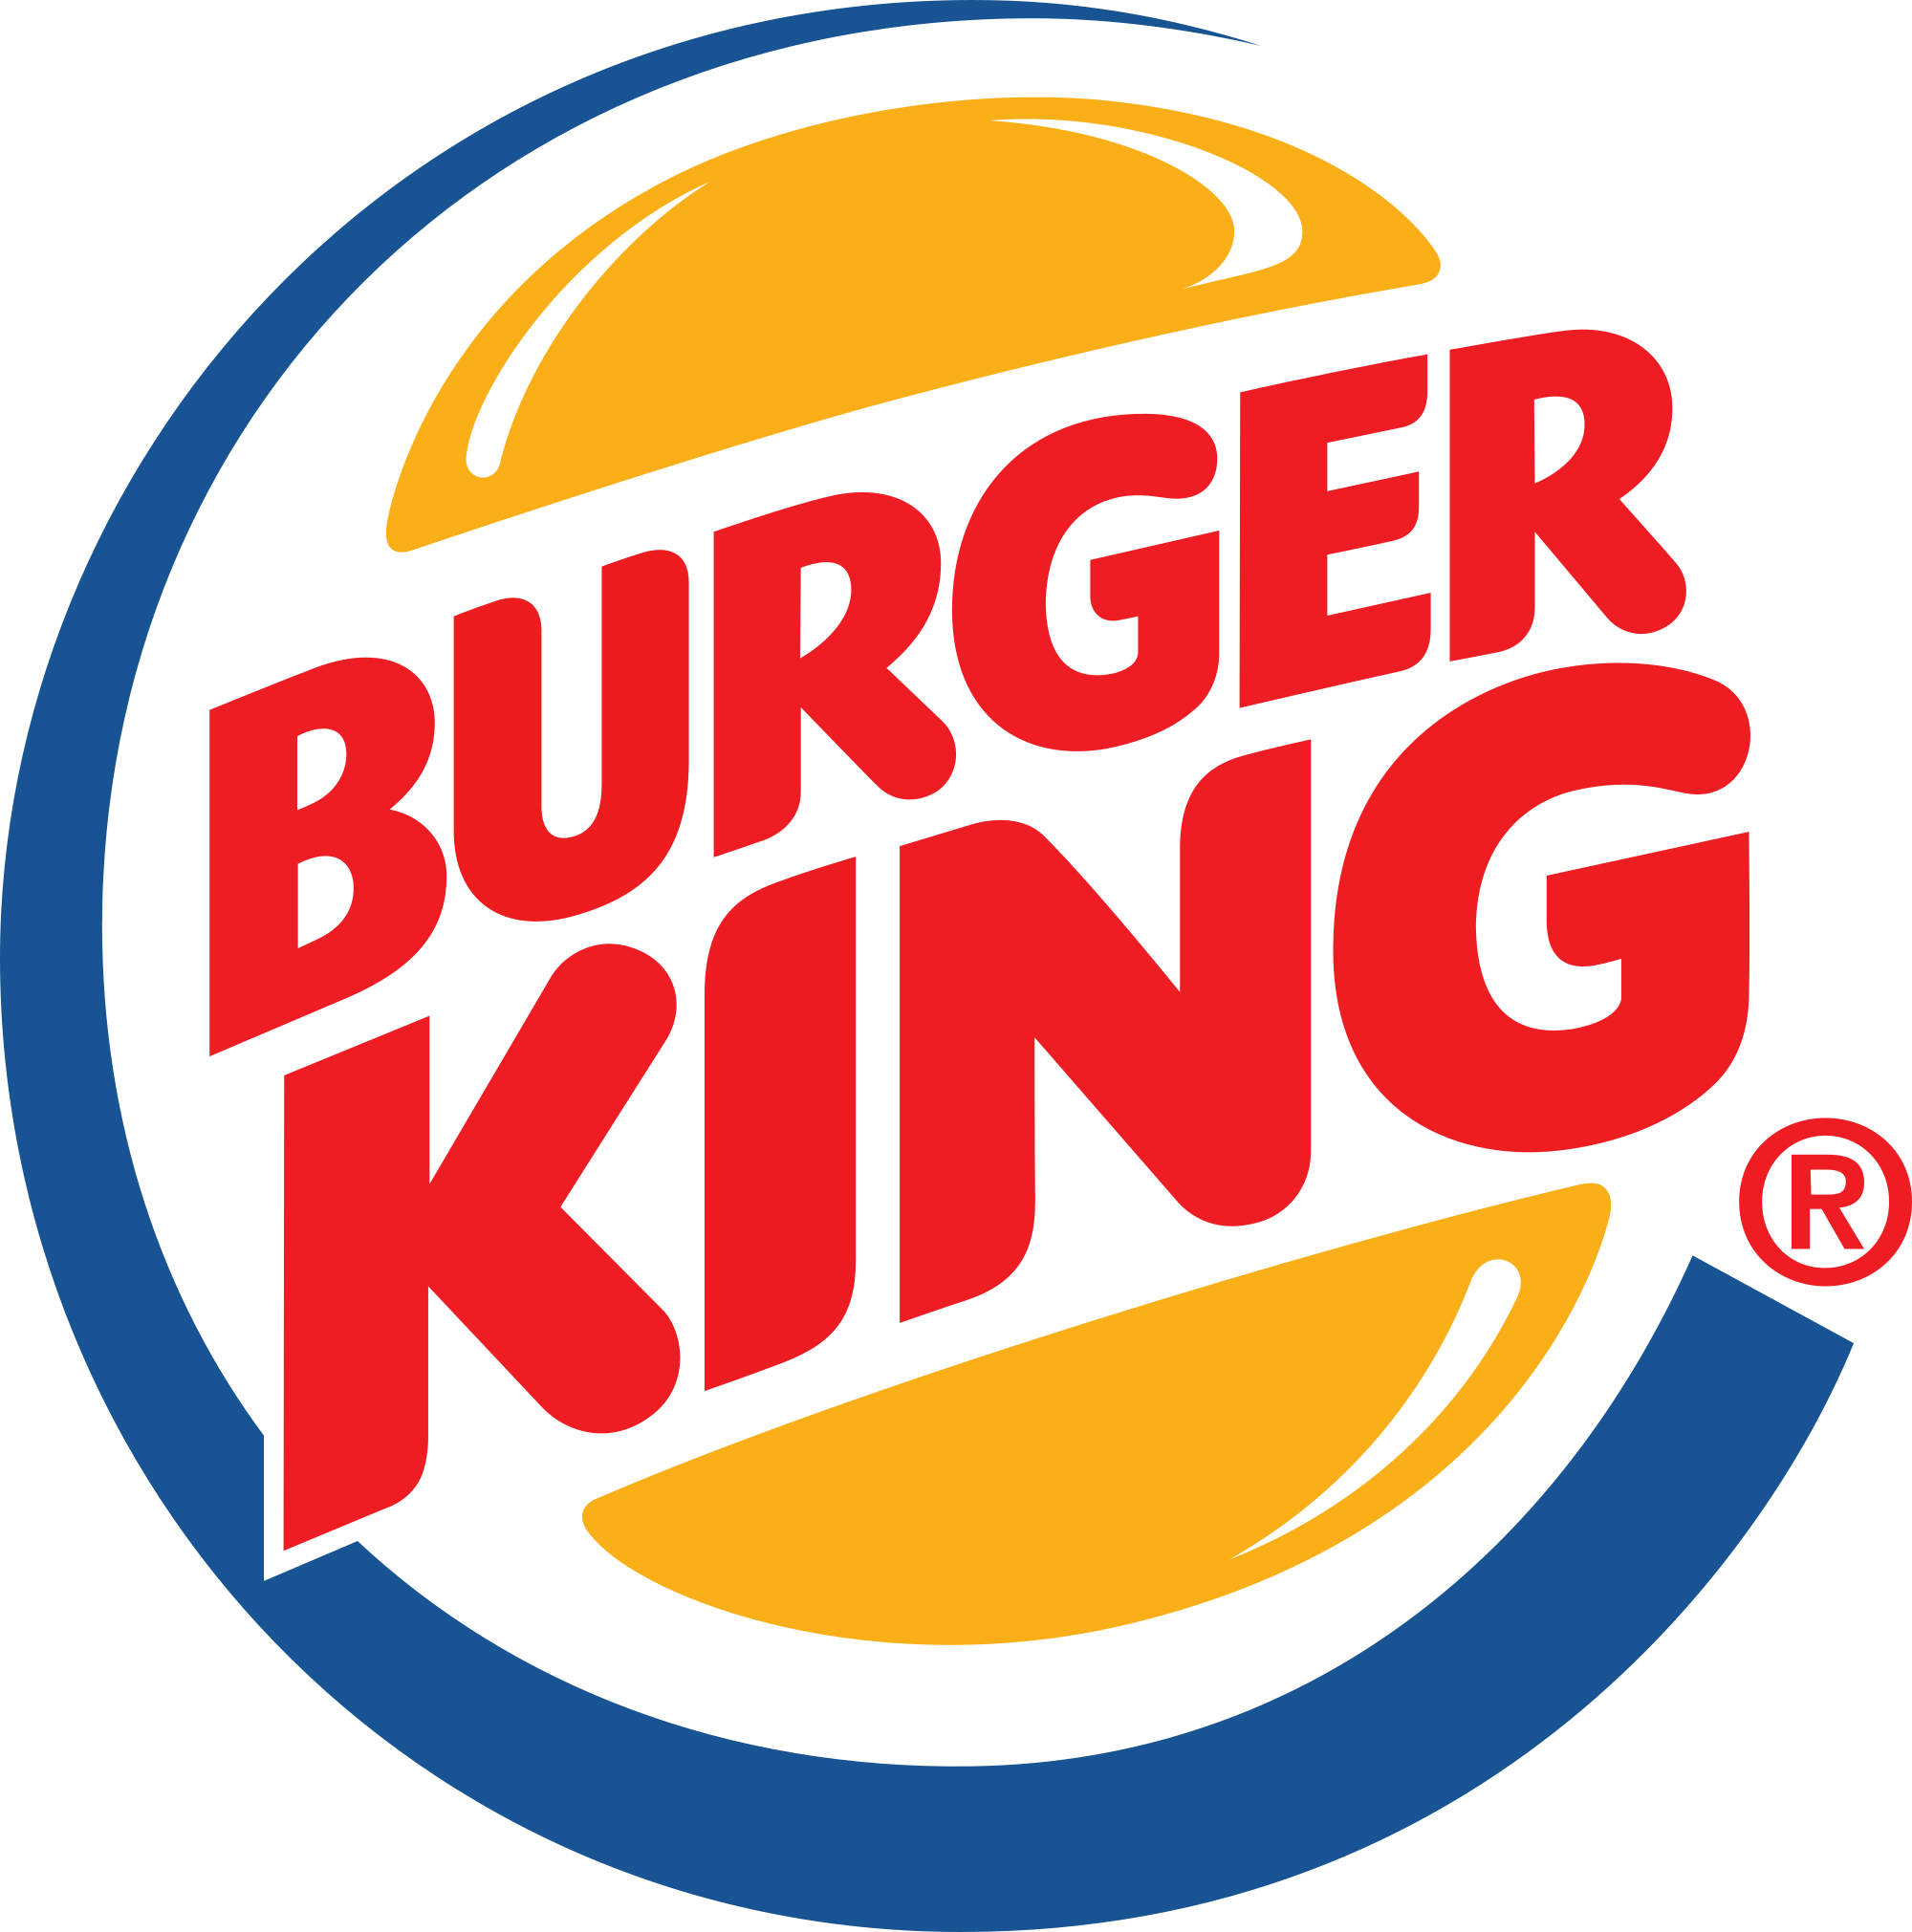 Burger King.png